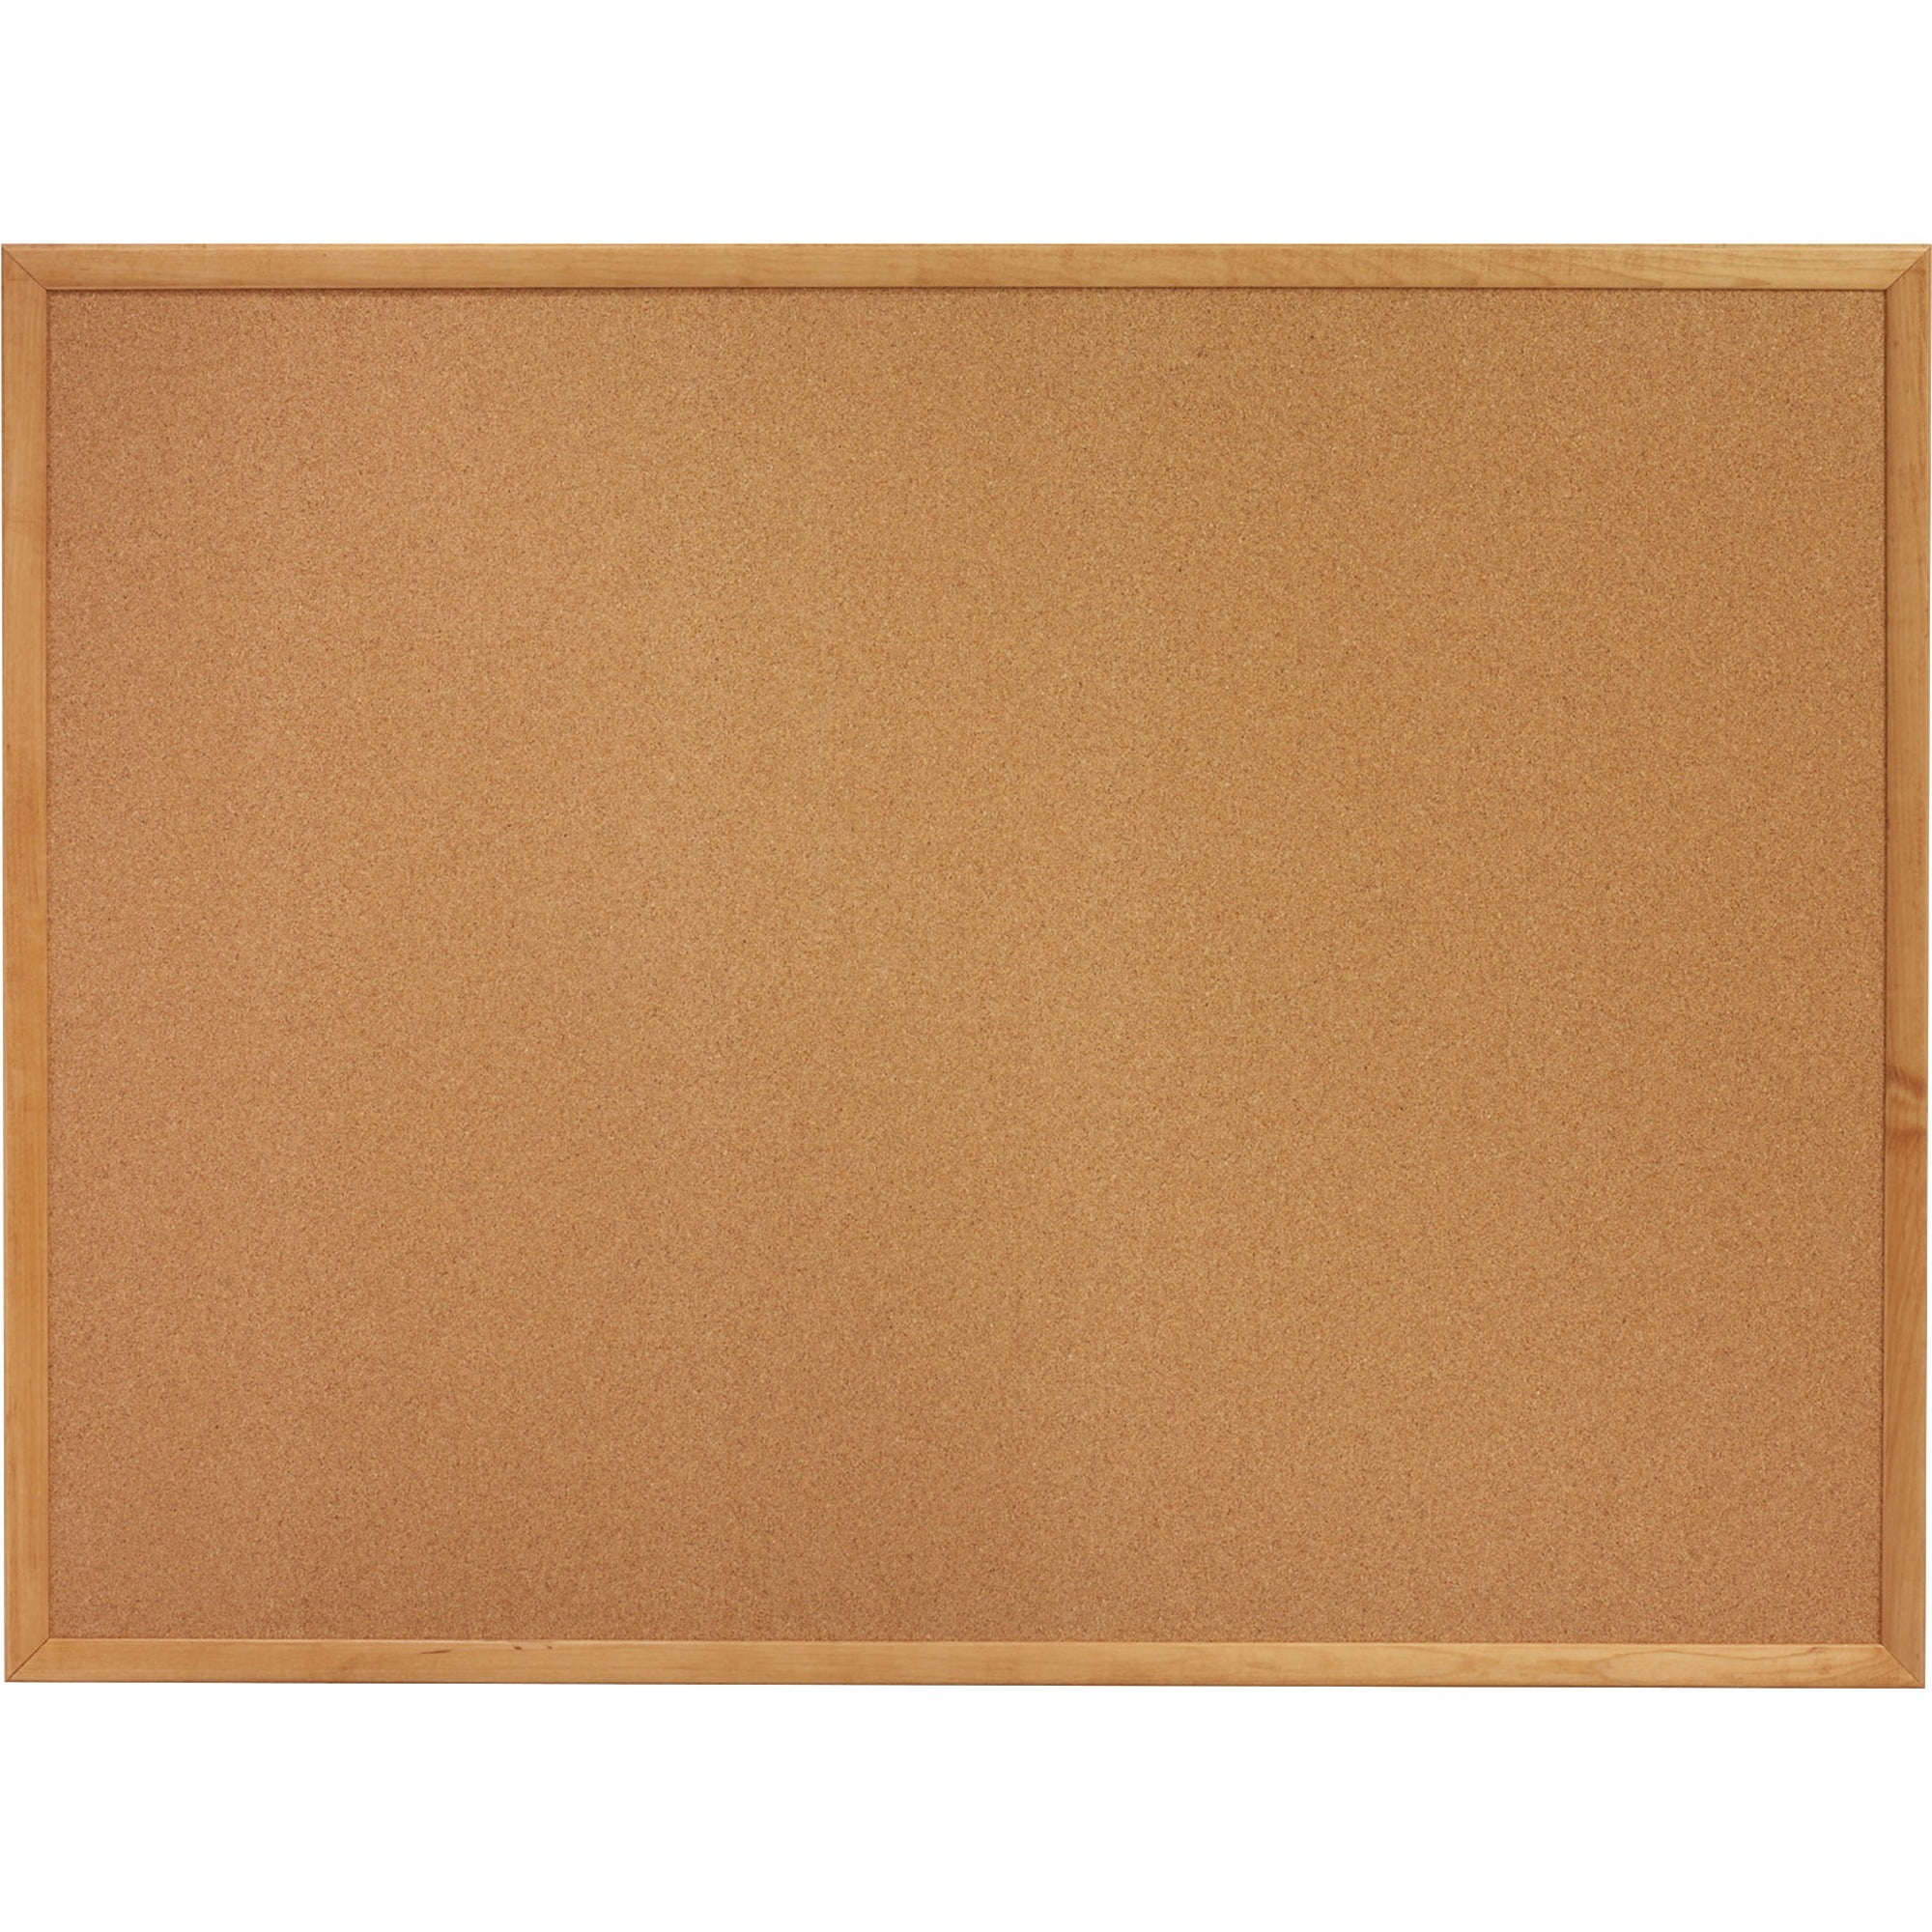 Quartet Classic Series Cork Bulletin Board 36 x 24 Oak Finish Frame 303 